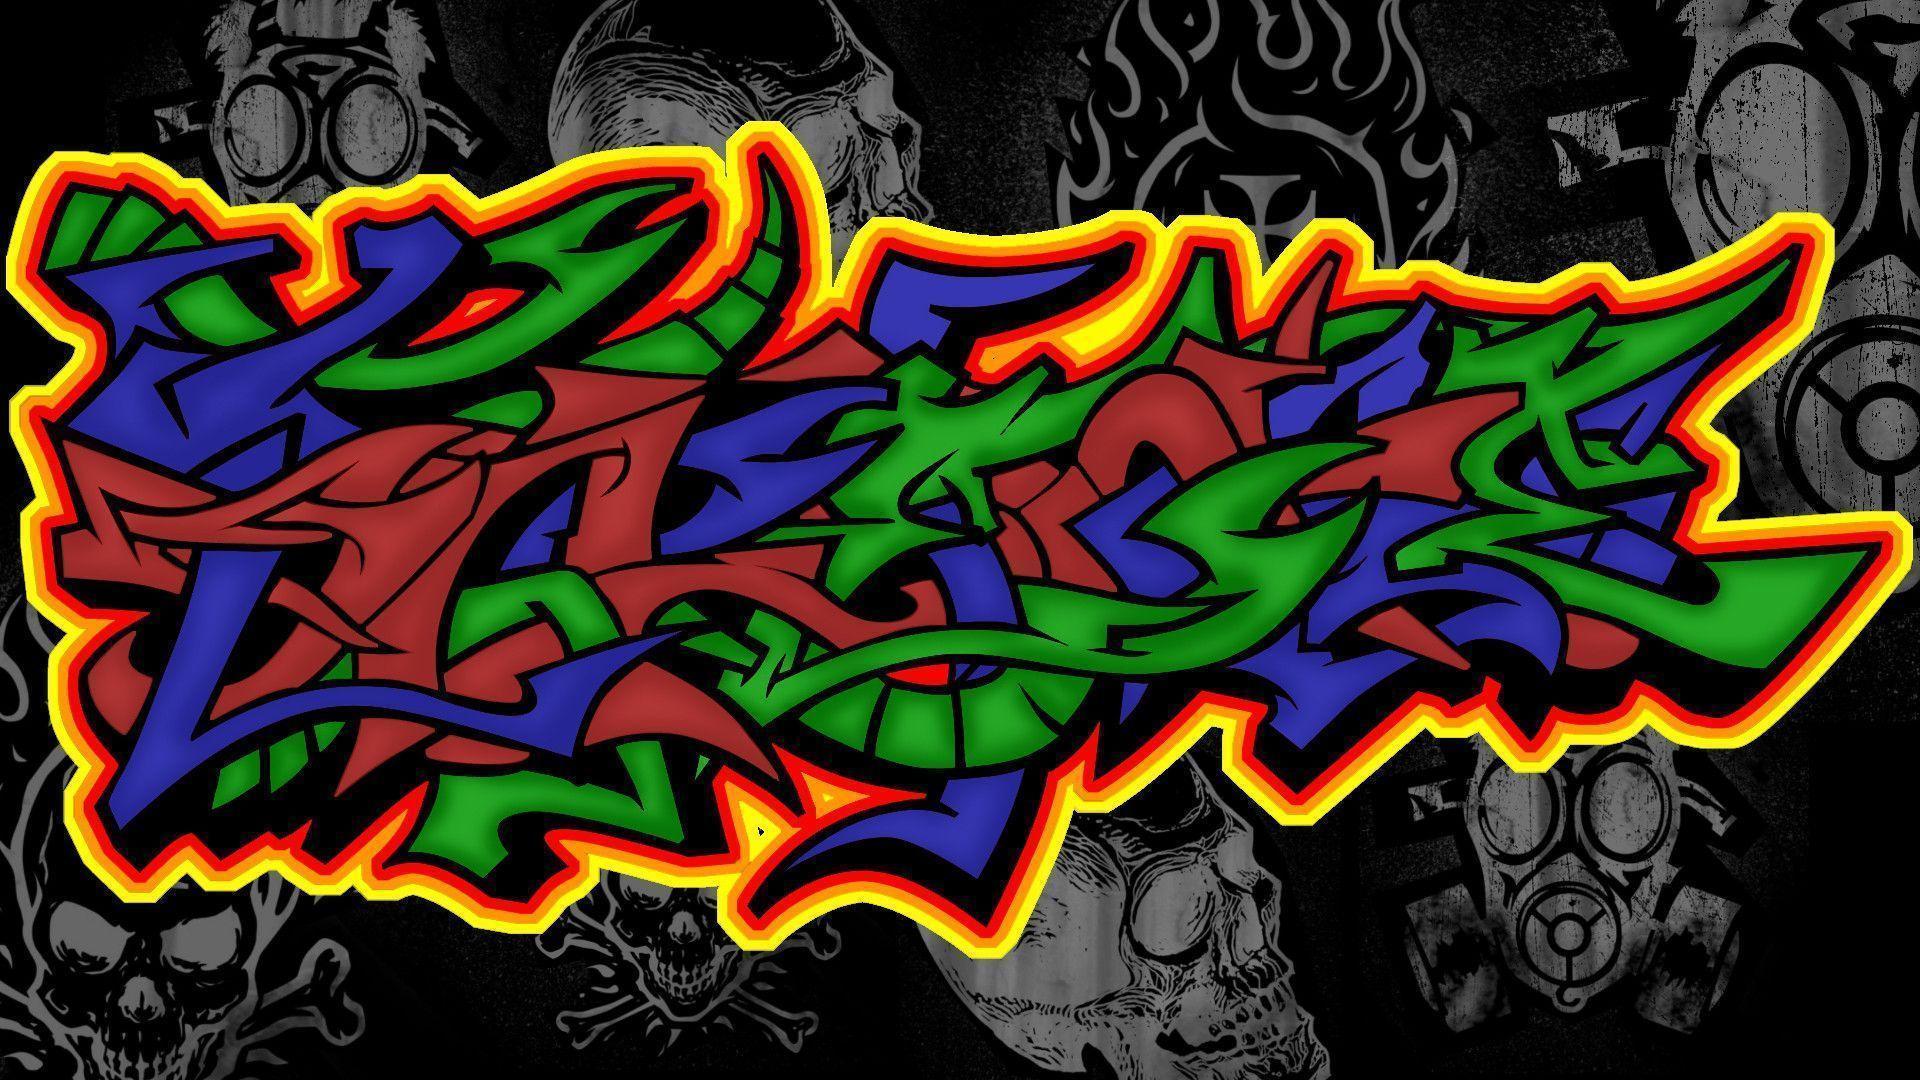 Graffiti Wallpaper 1080p / Wallpaper Amazing Graffiti High